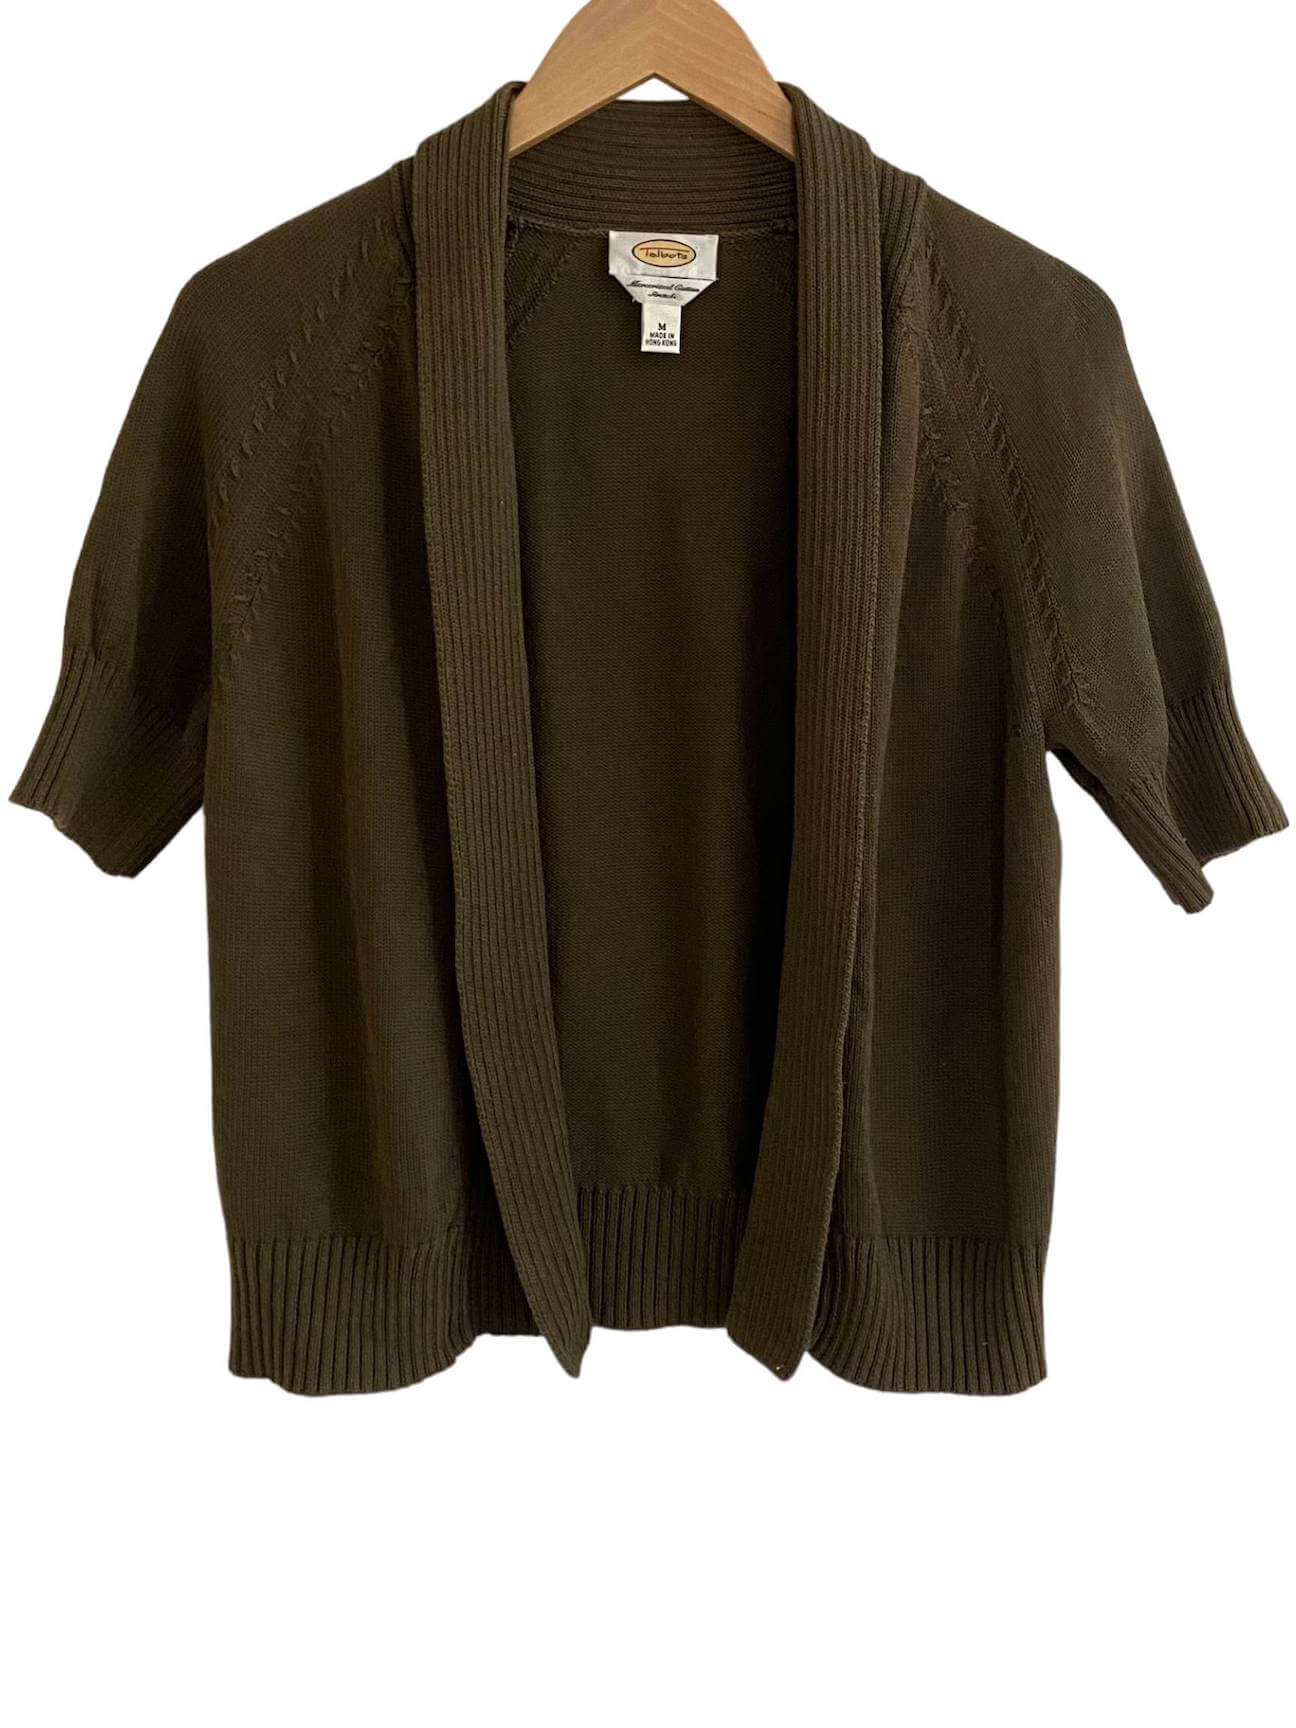 Warm Autumn TALBOTS walnut brown open cardigan sweater